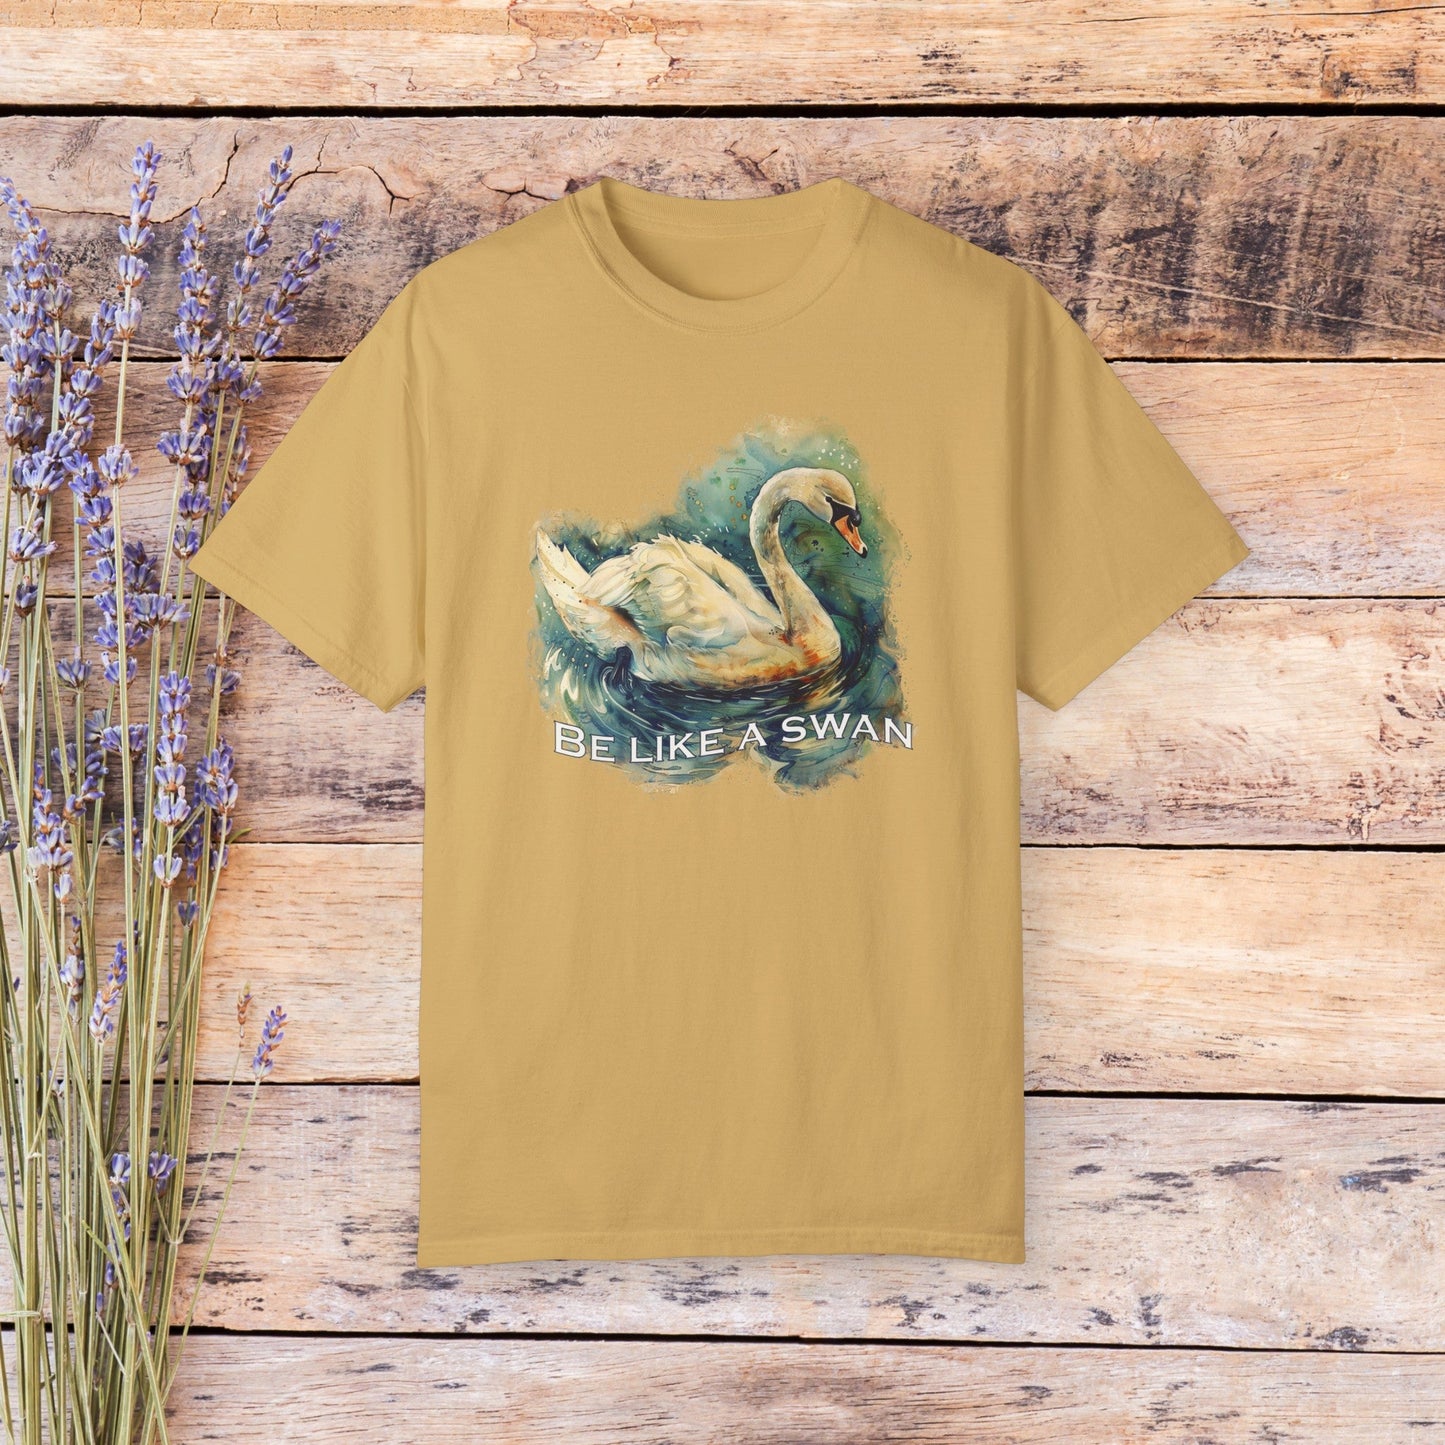 Swan Art T - shirt, Original Art Print Tee, Inspirational "Be like a Swan", Comfort Colors Shirt - FlooredByArt